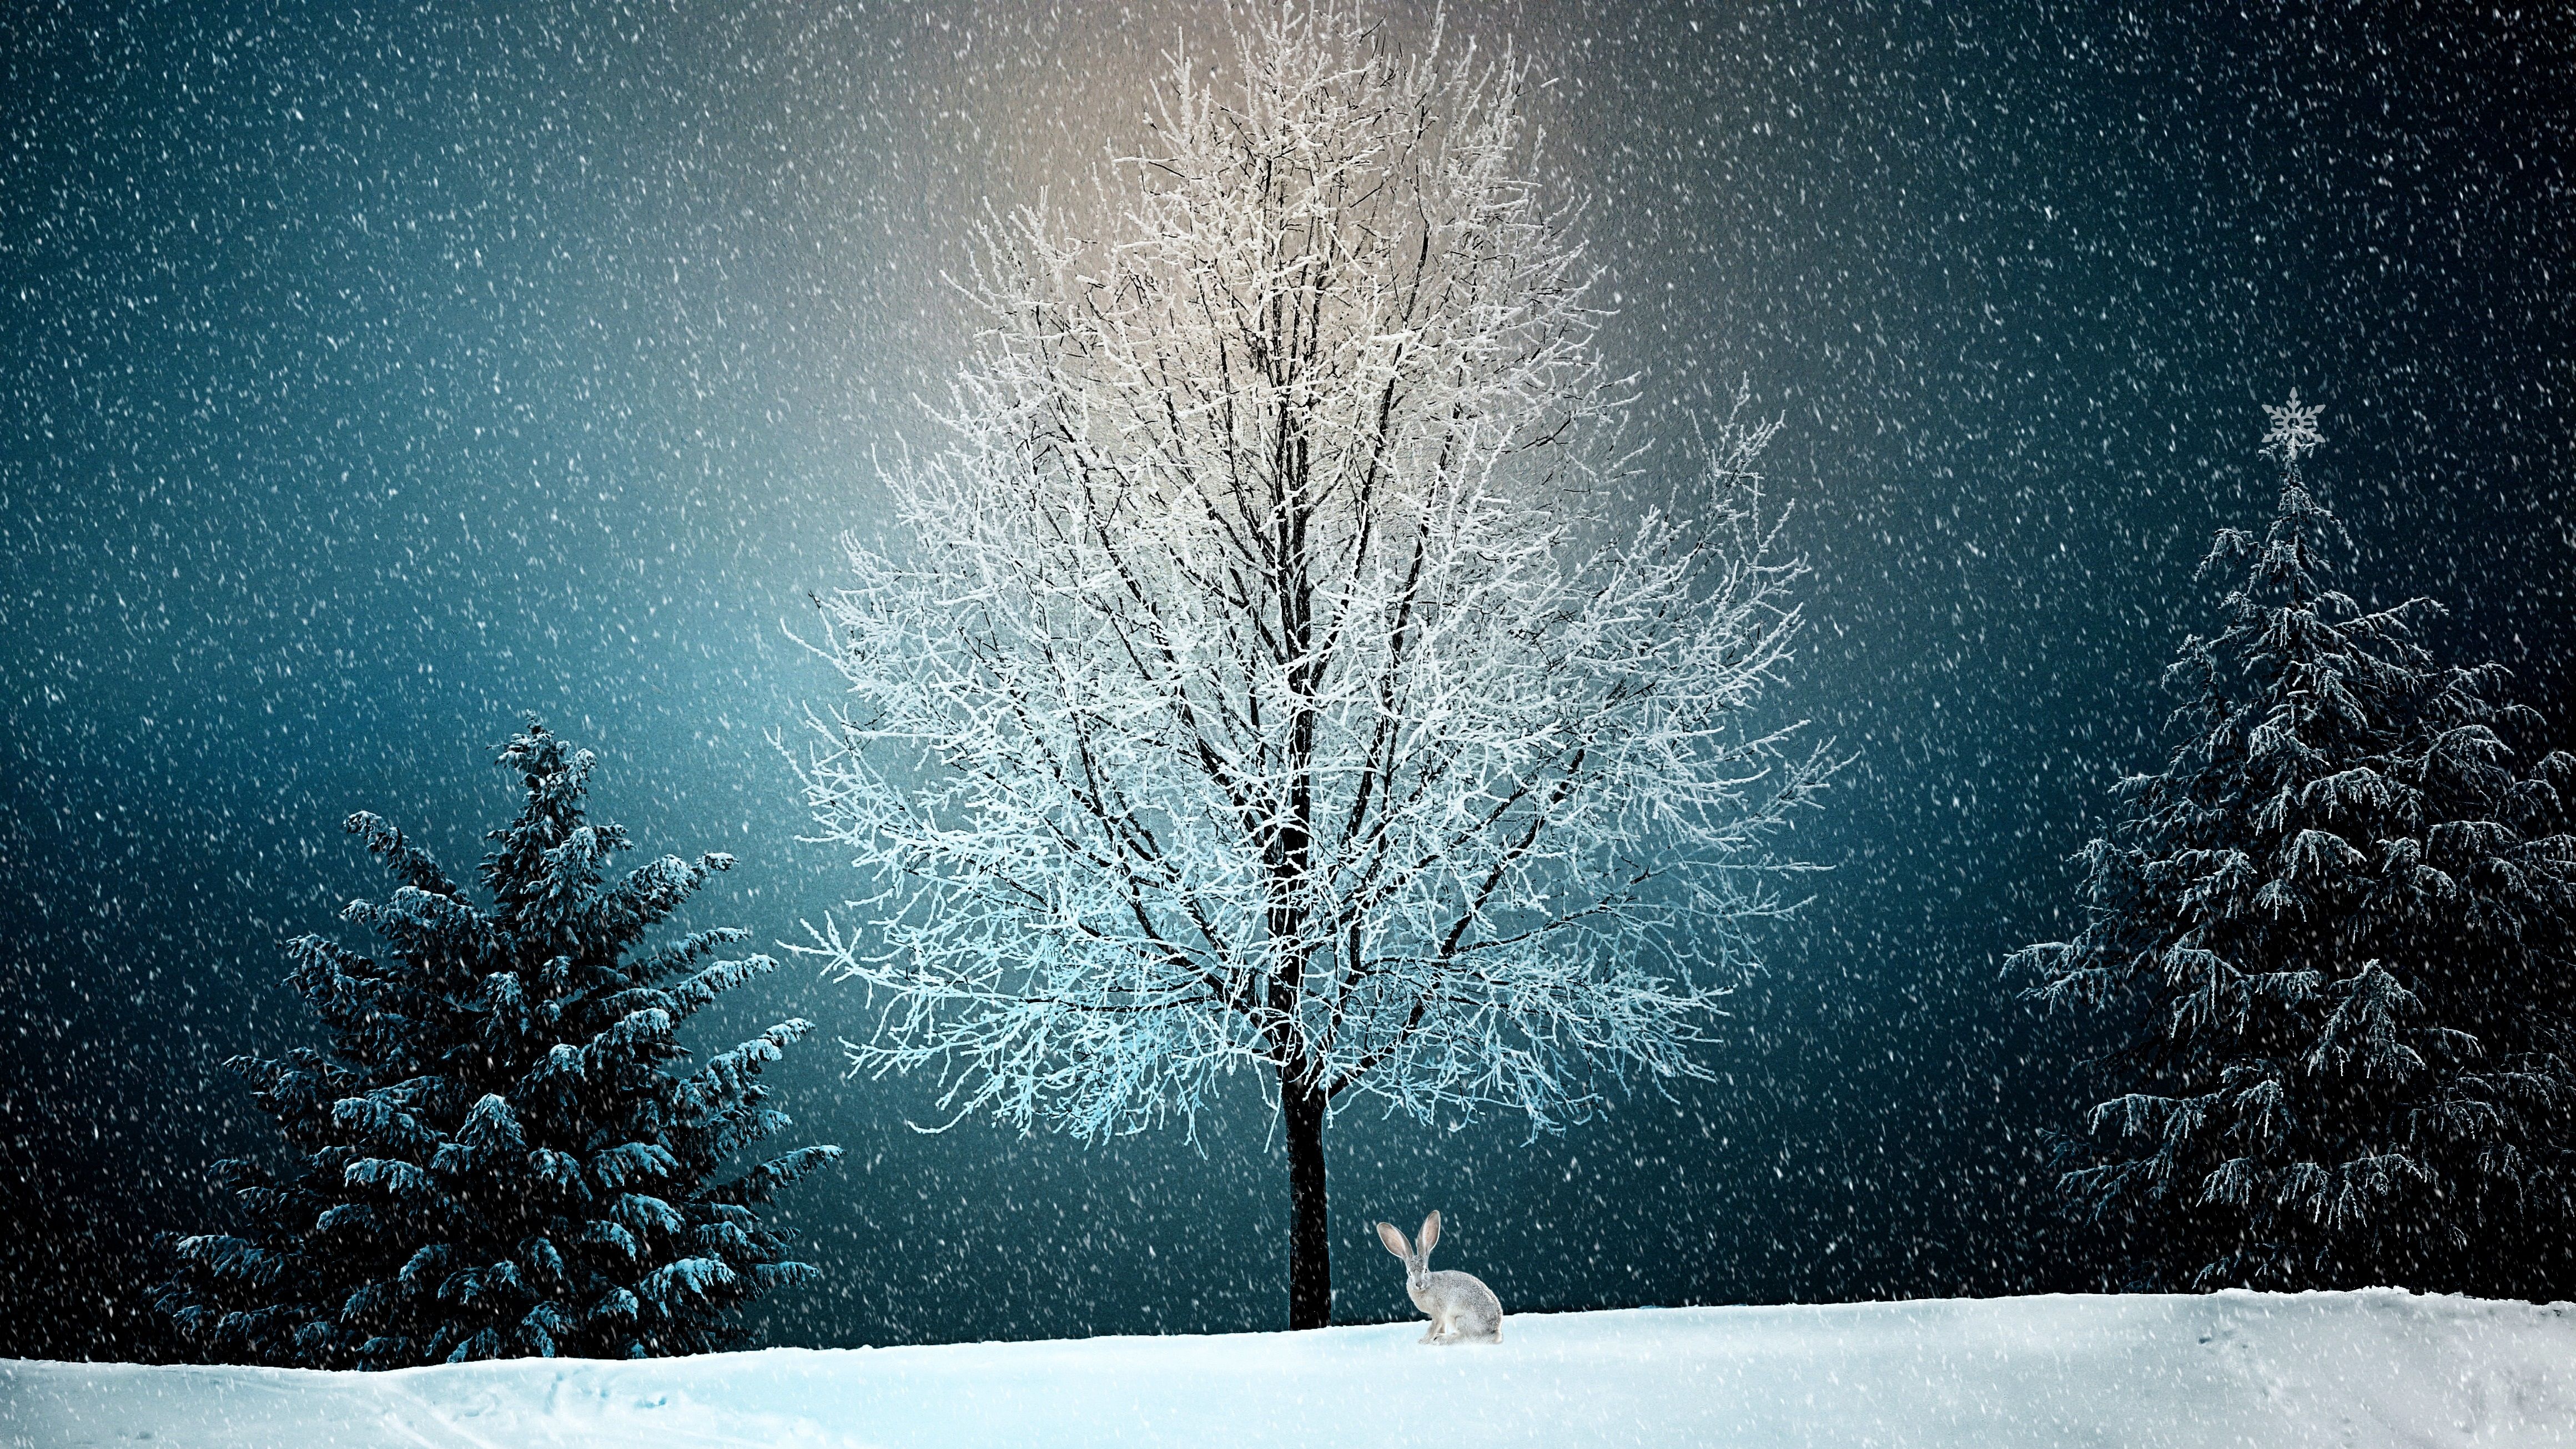 Winter Snow Tree 5k, HD Nature, 4k Fondos de pantalla, Imágenes, Fondos